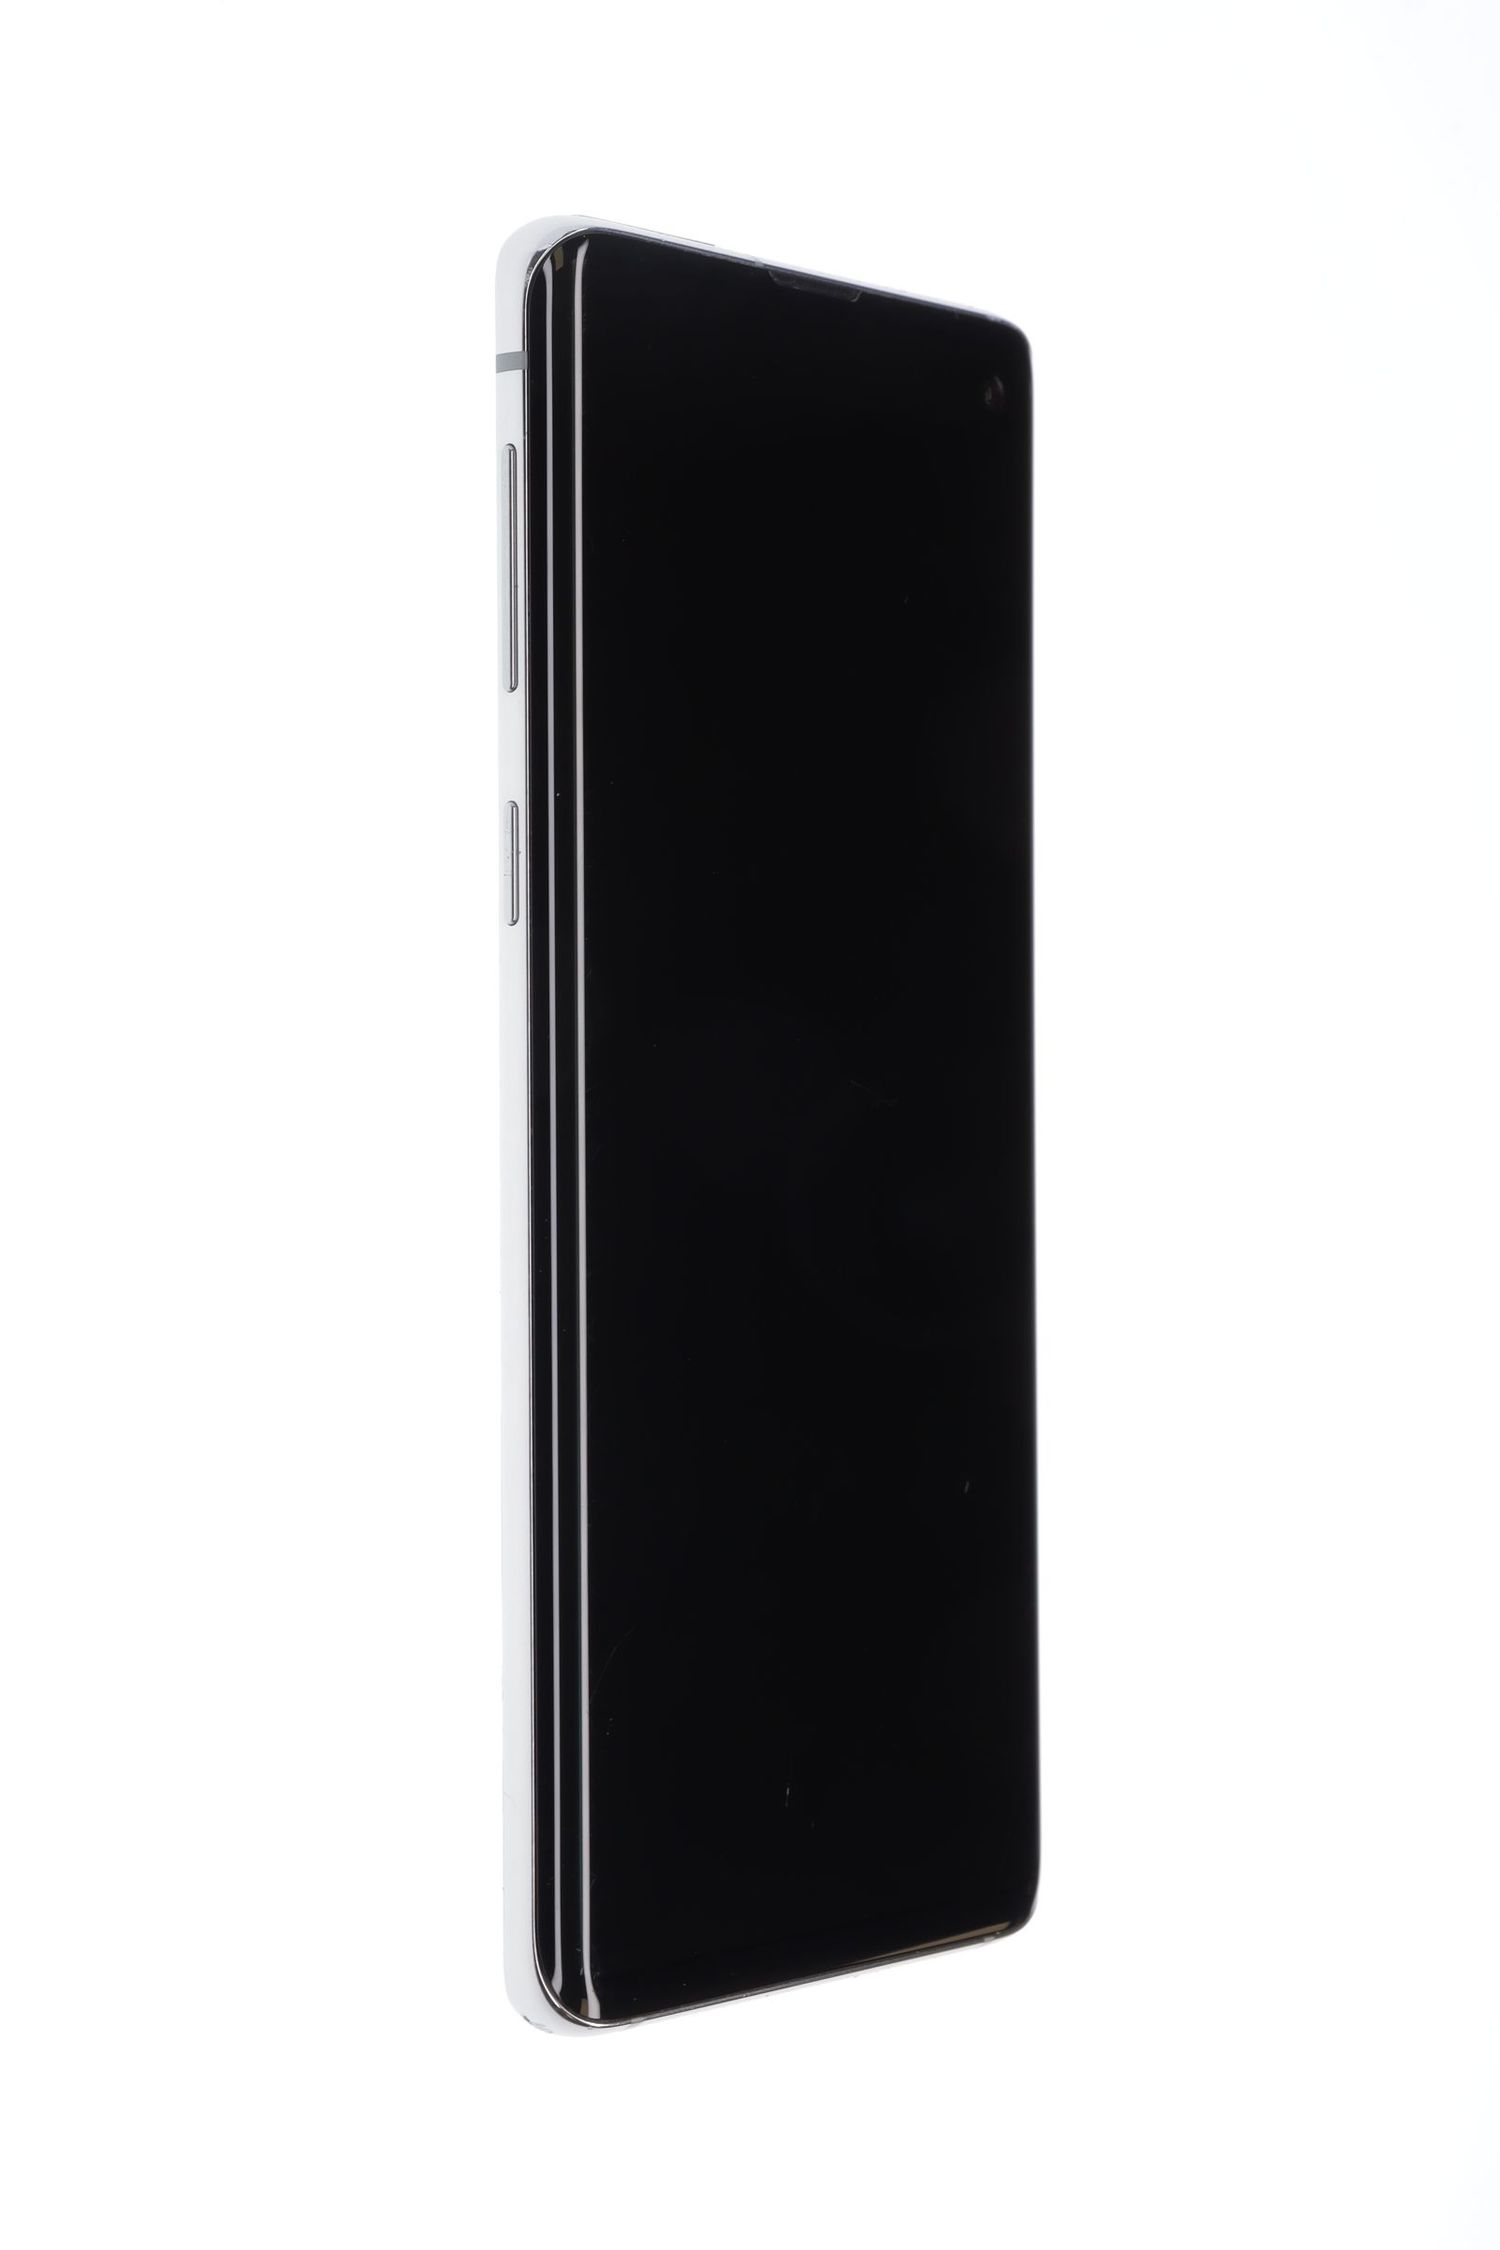 Mobiltelefon Samsung Galaxy S10 Dual Sim, Prism White, 128 GB, Foarte Bun